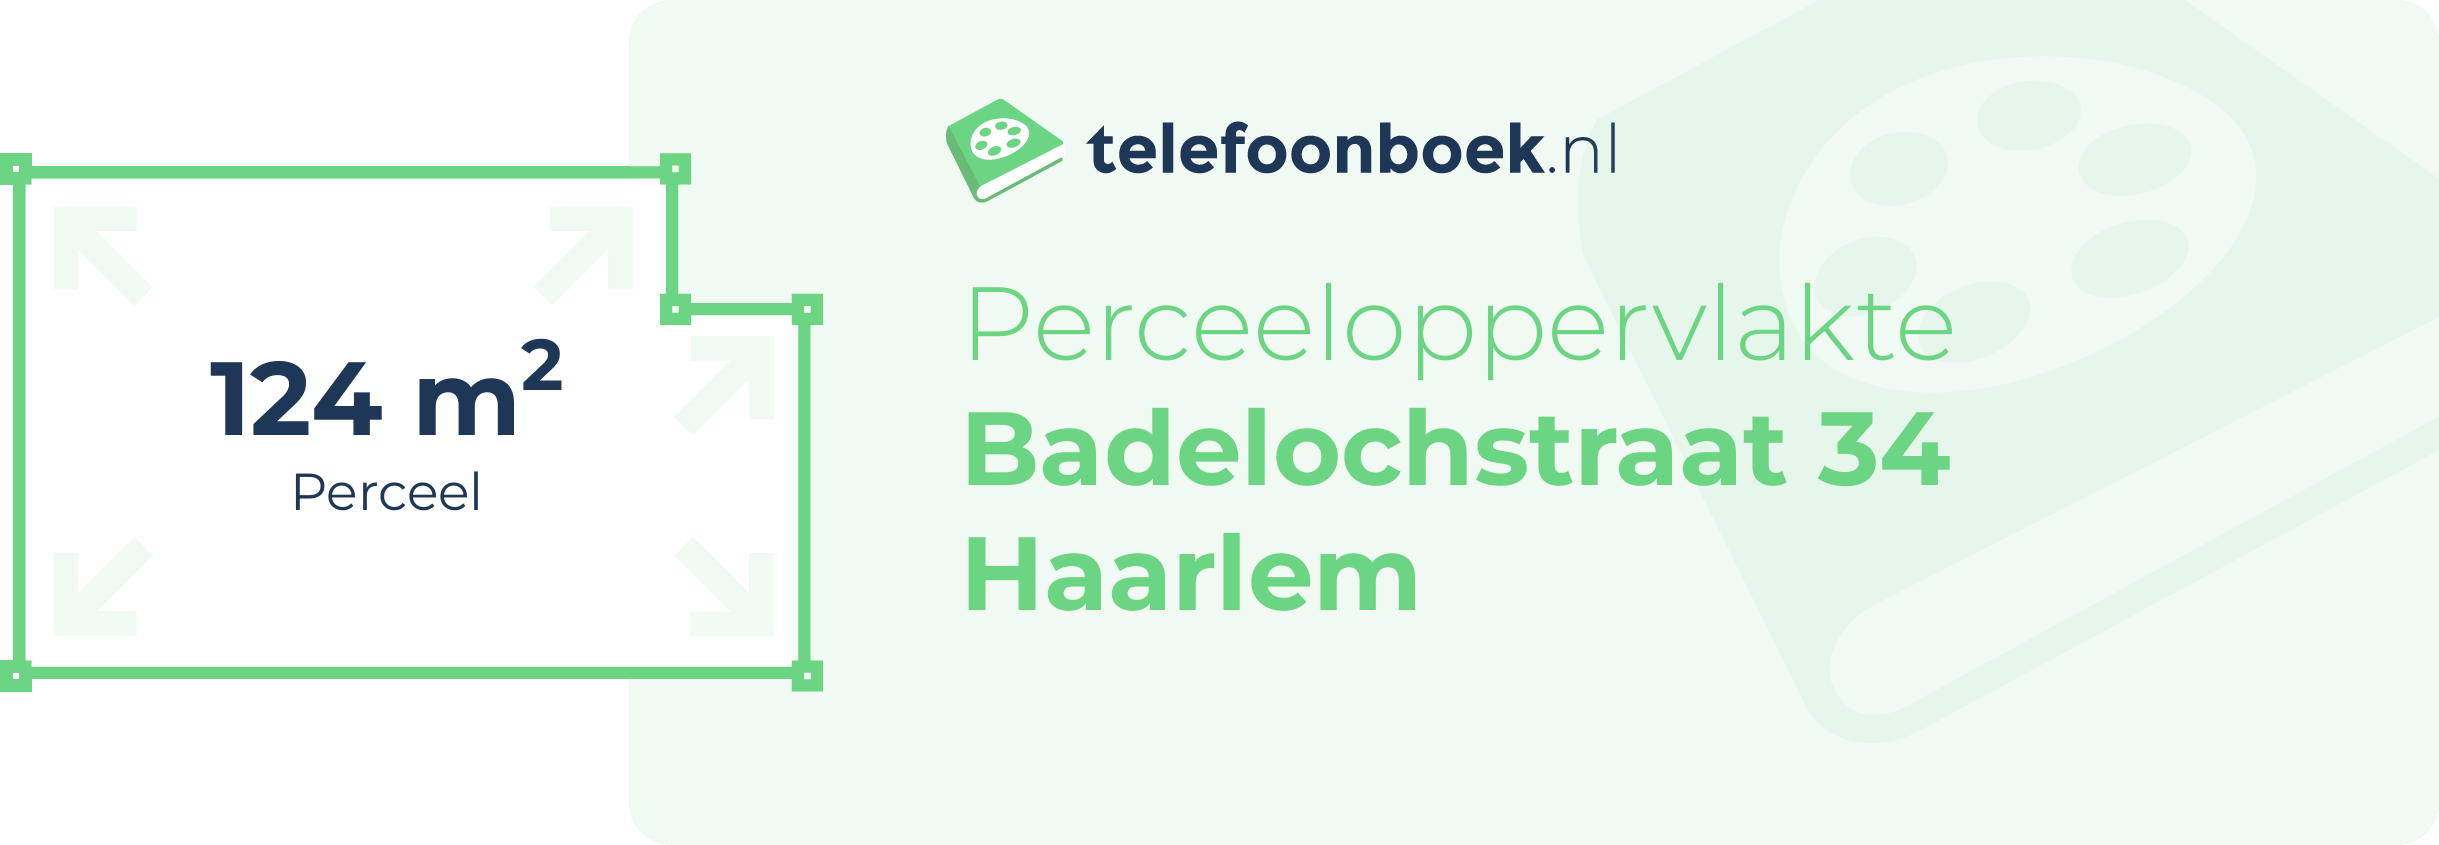 Perceeloppervlakte Badelochstraat 34 Haarlem